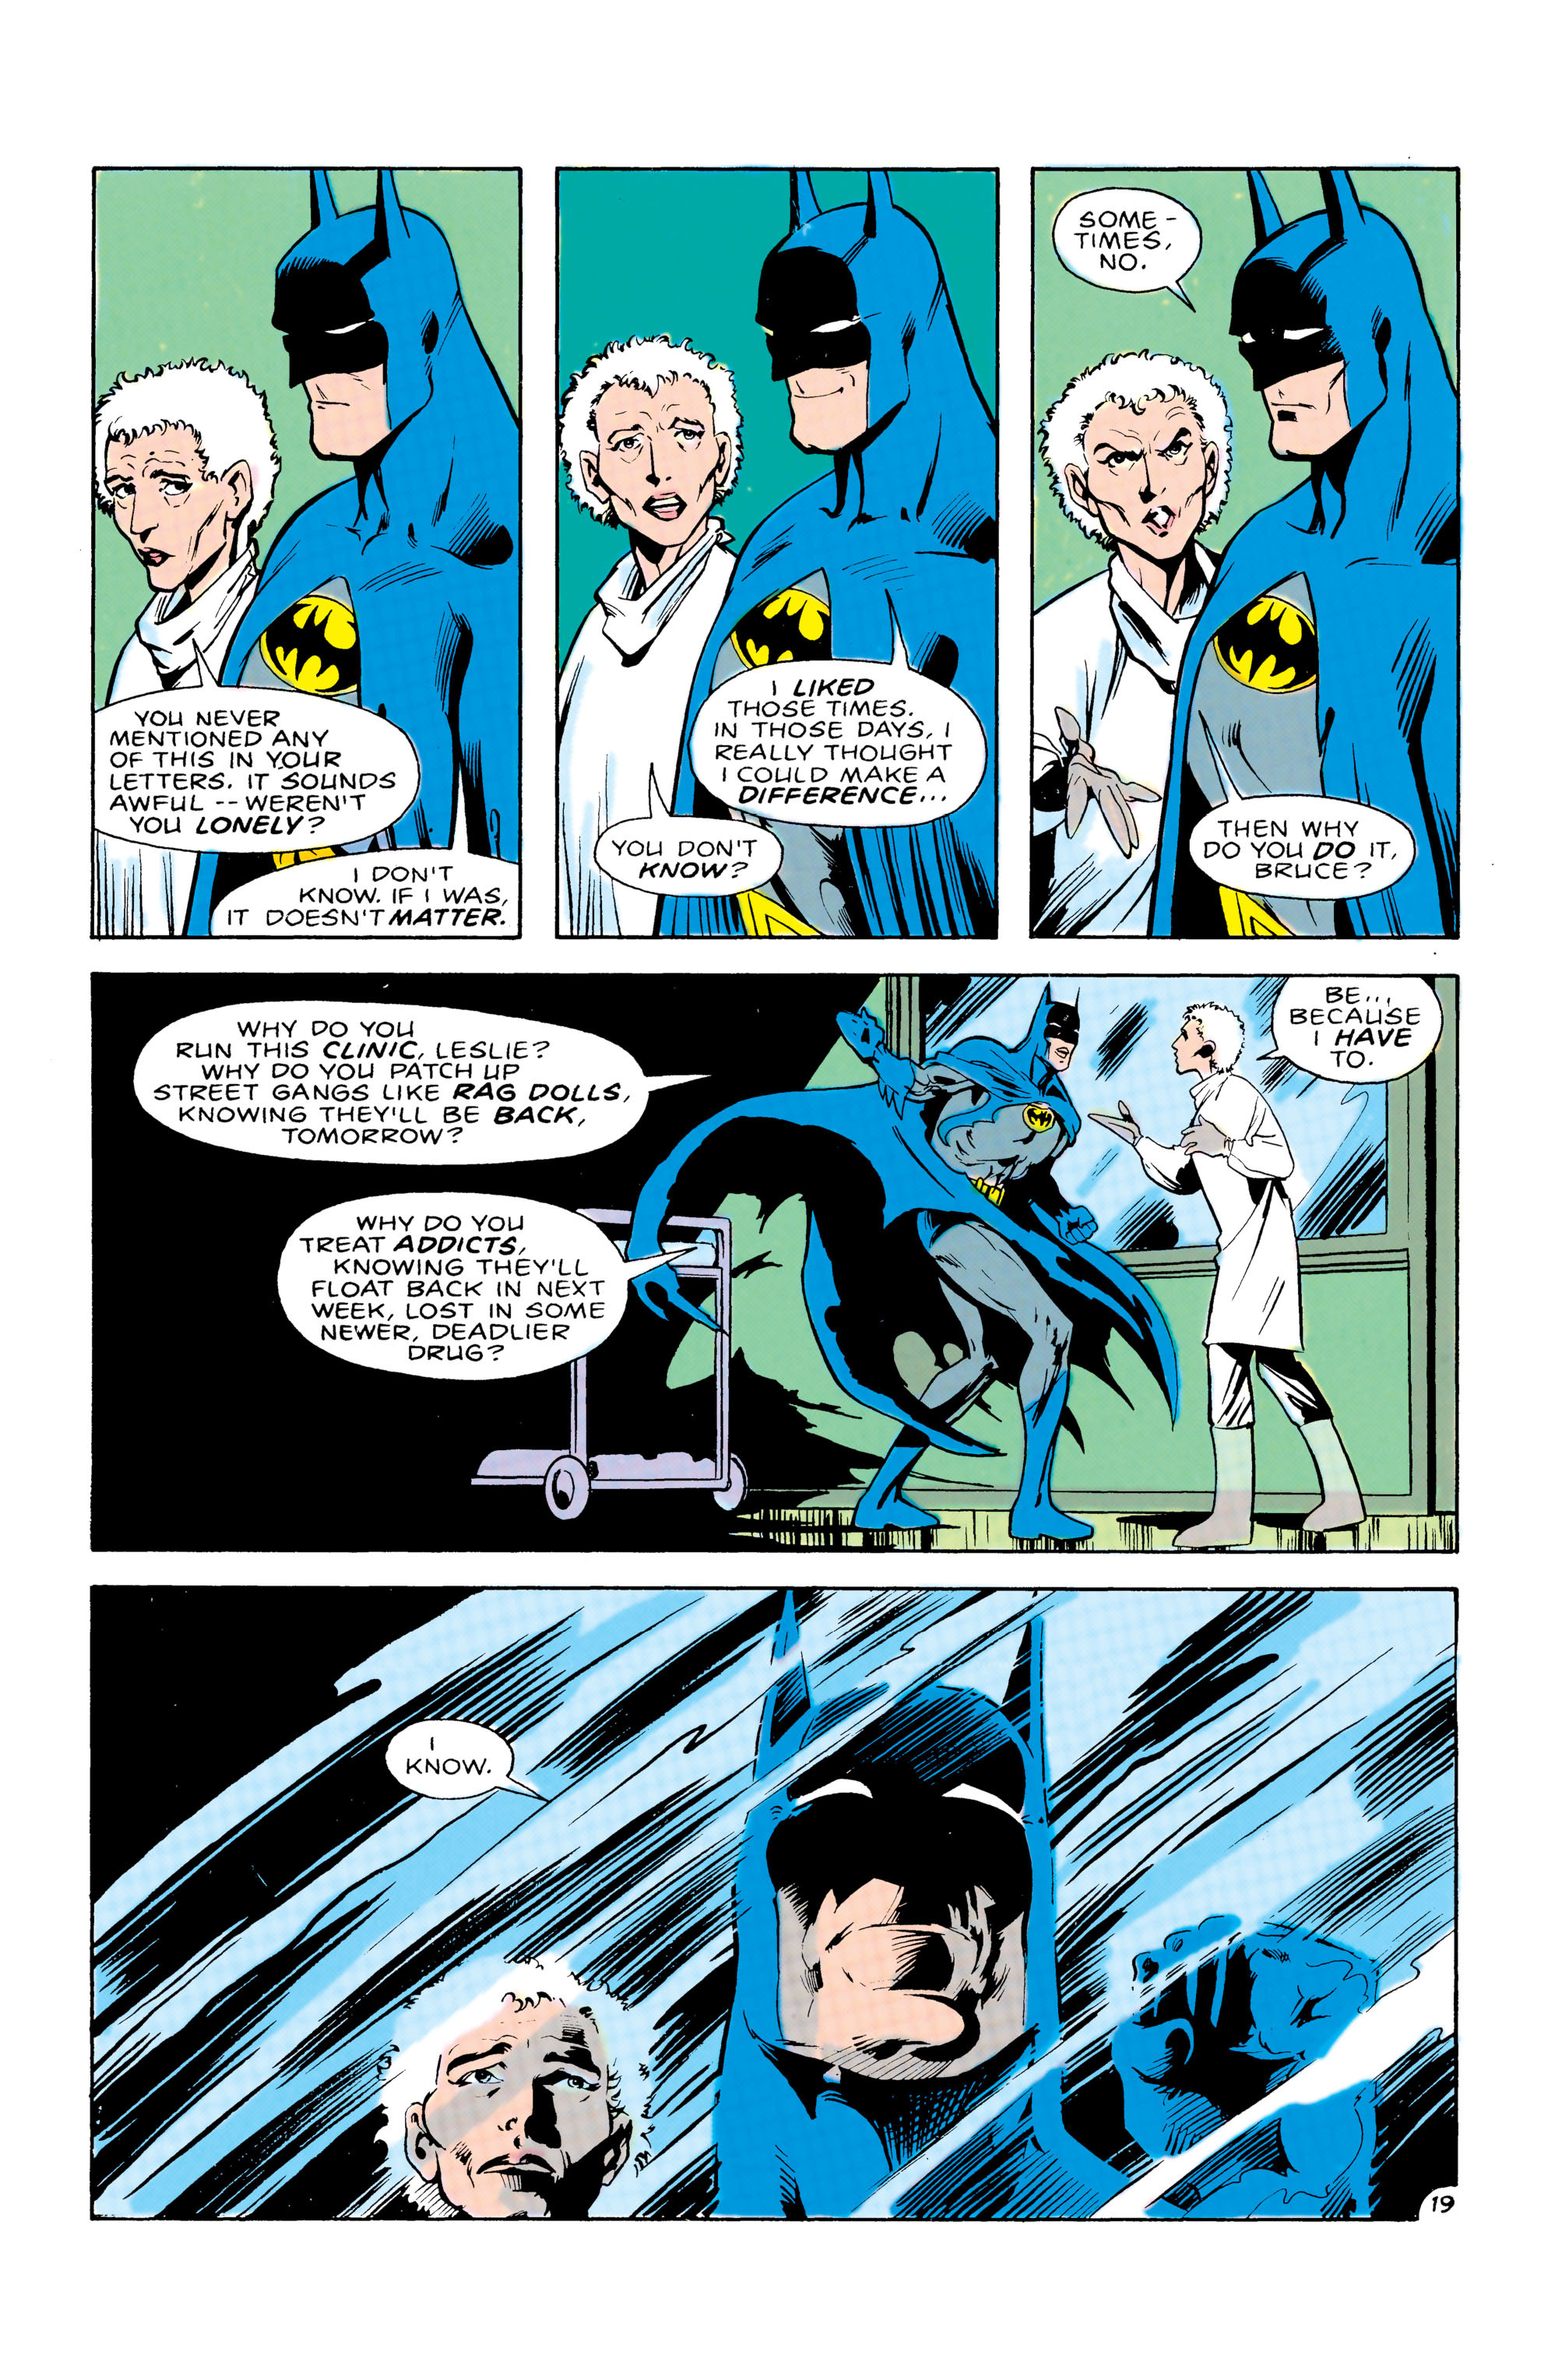 Psychology of Bruce Wayne RCO020